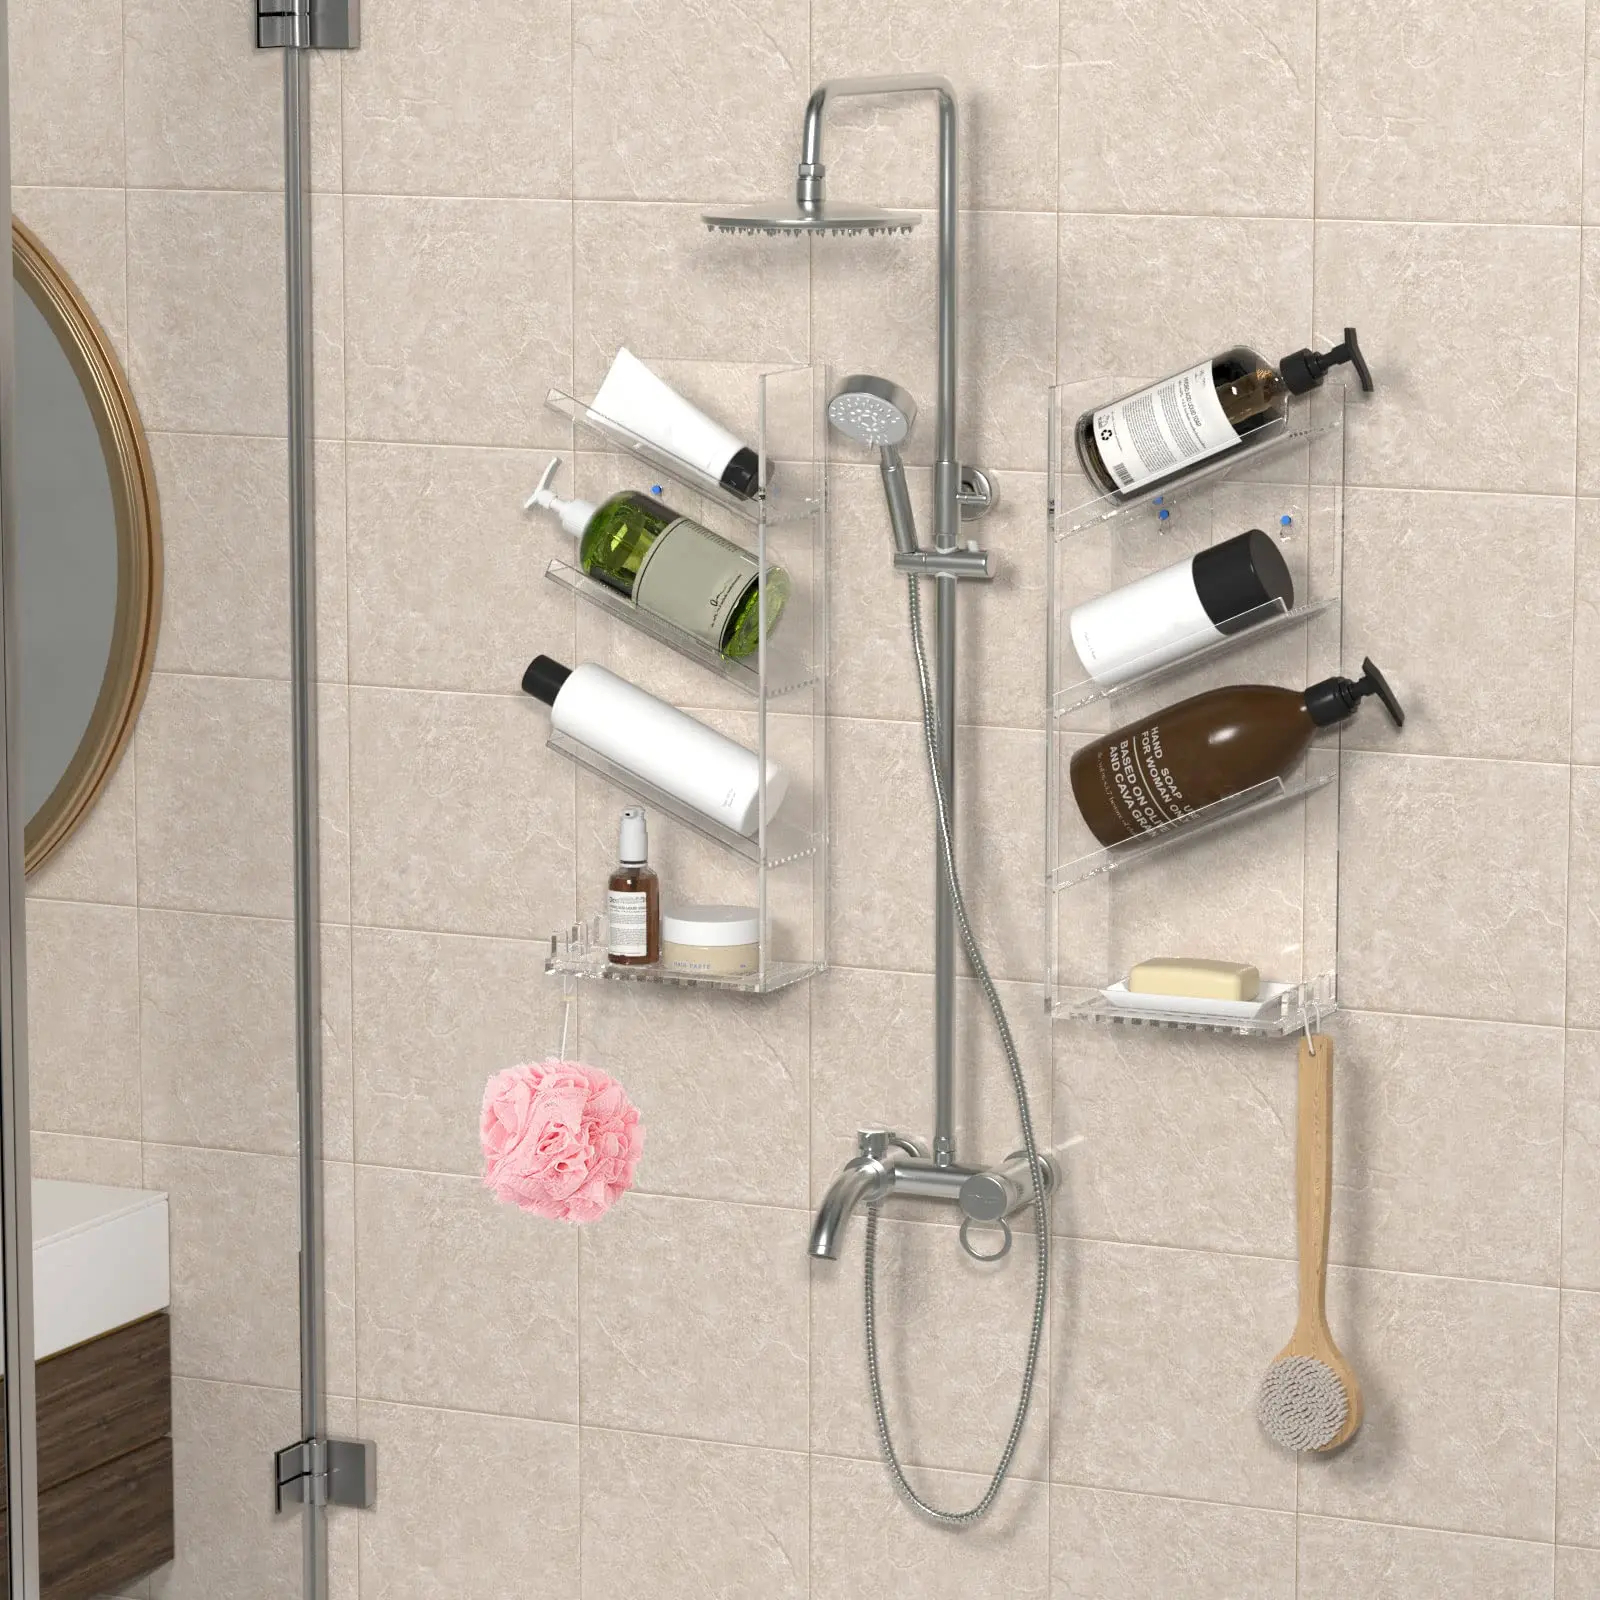 https://ae01.alicdn.com/kf/Af6ed589505b045559fdcf1e9d3cbb6f5O/Clear-Acrylic-Bathroom-Organizer-Shower-Caddy-No-Drilling-Adhesive-Shampoo-Holder-Wall-Mounted-with-Hooks.jpg